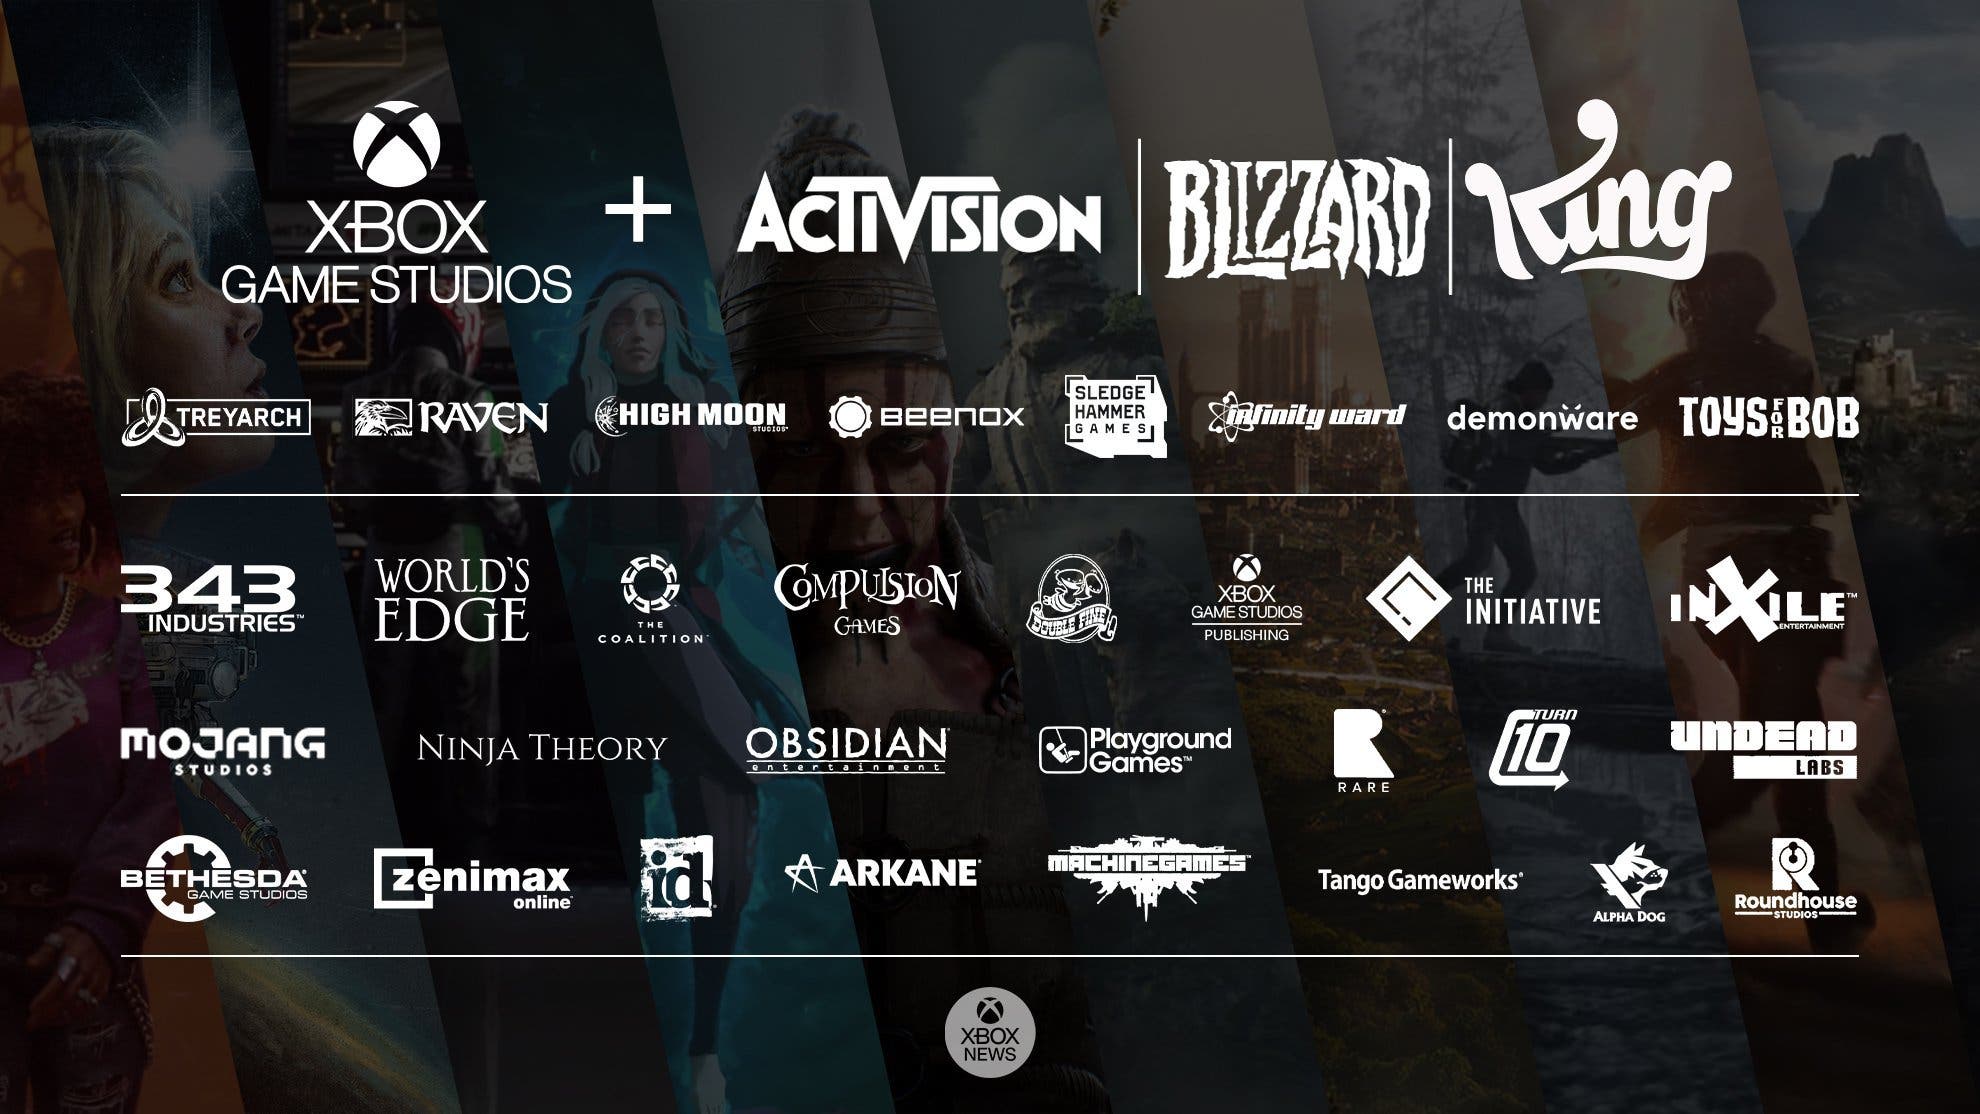 Activision - Blizzard